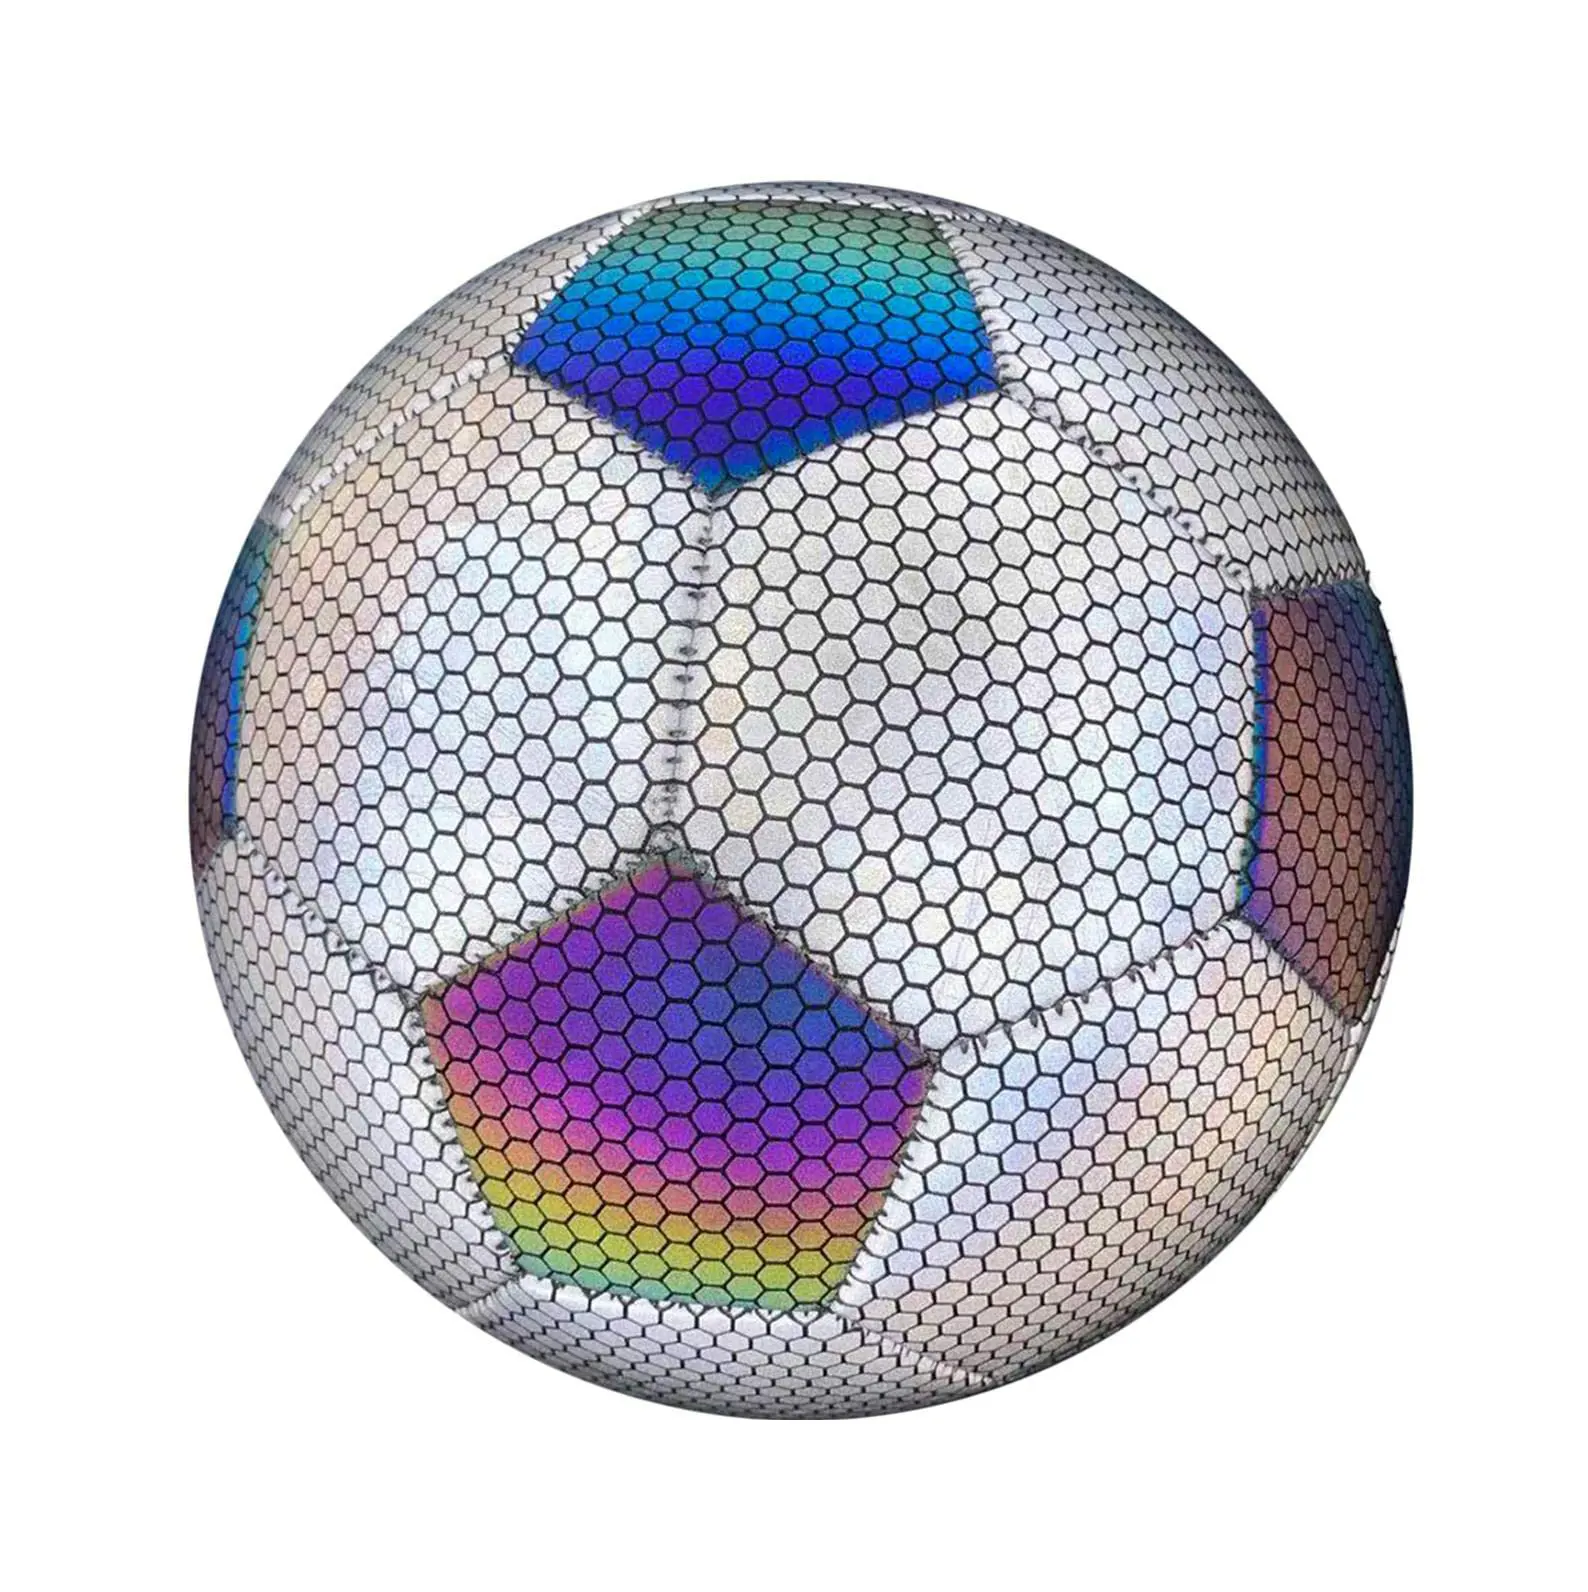 Customized manufacturers directly supply match footballs soccer balls High-end match soccer balls football